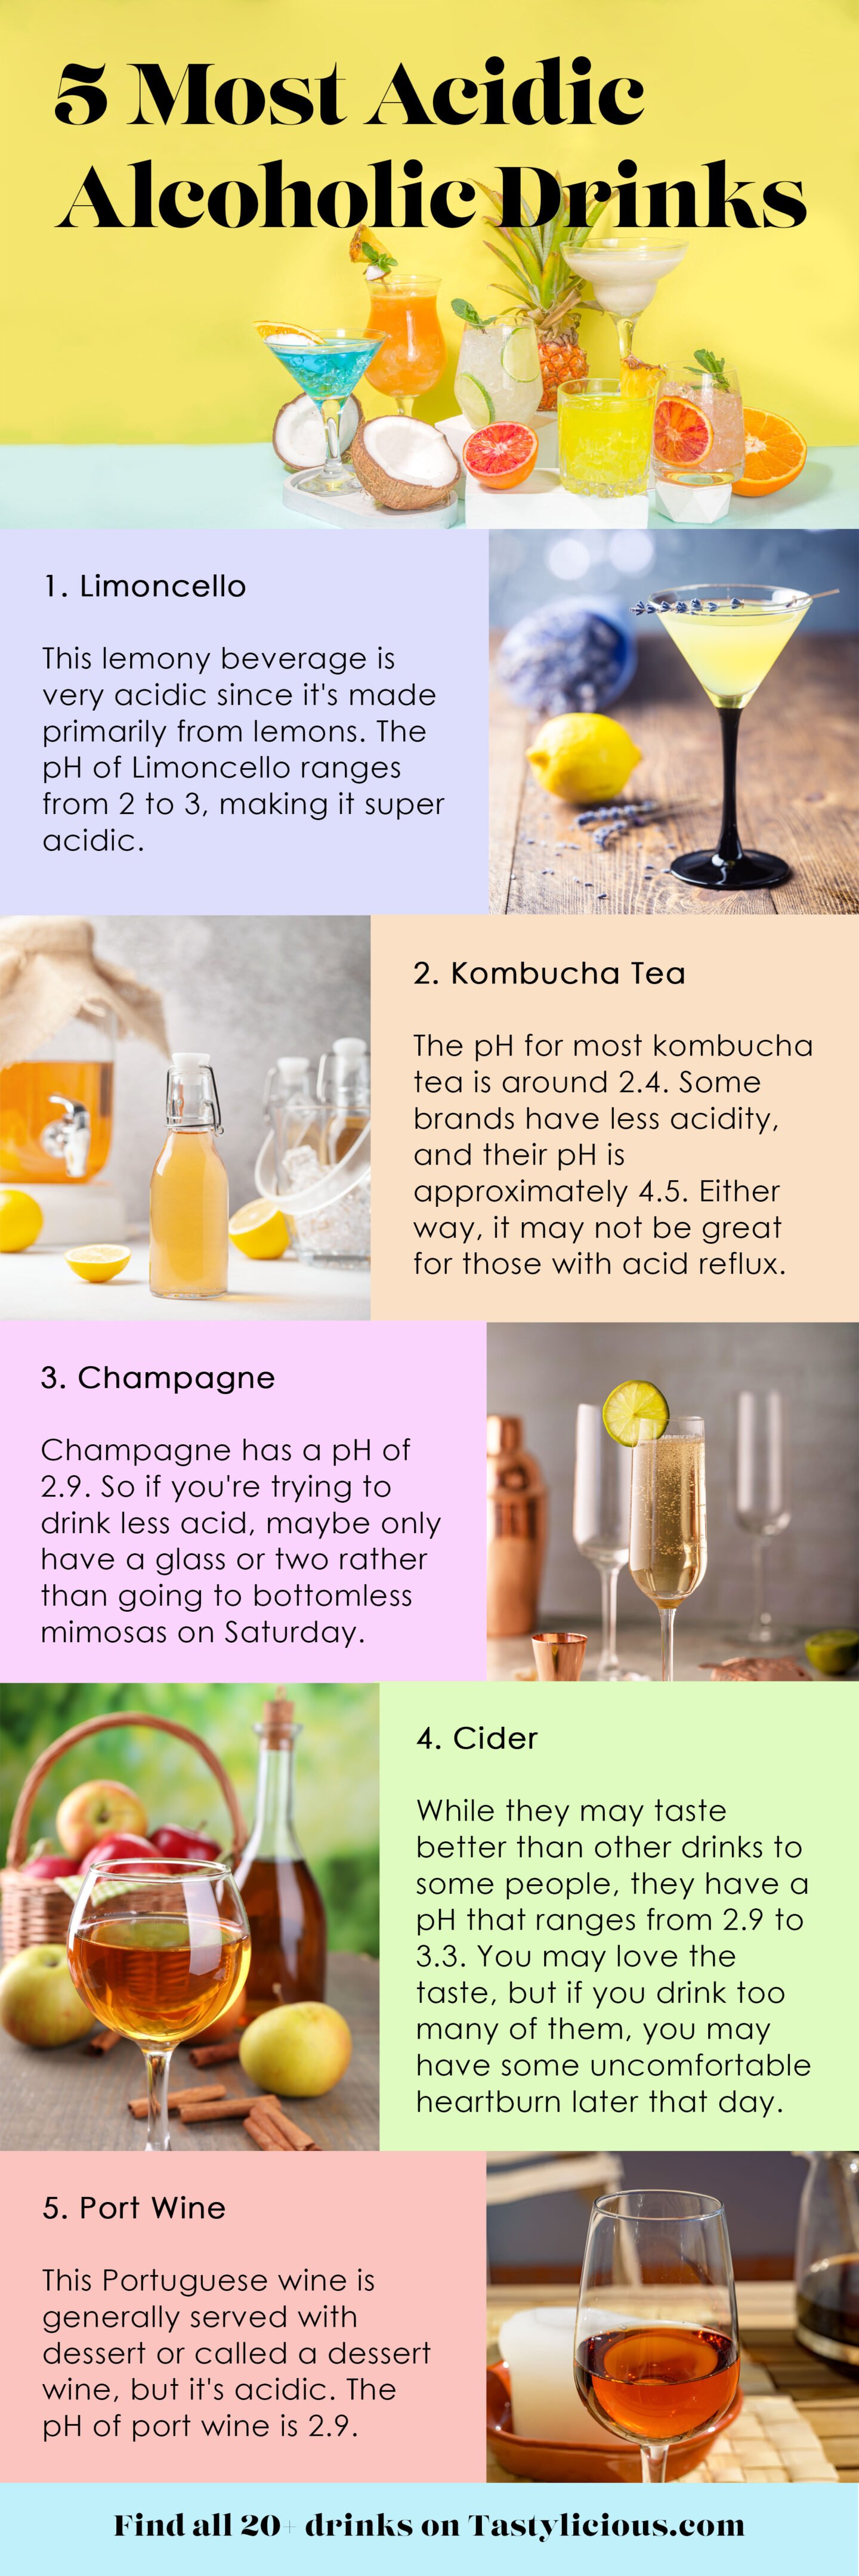 5 most acidic alcoholic drinks infographic